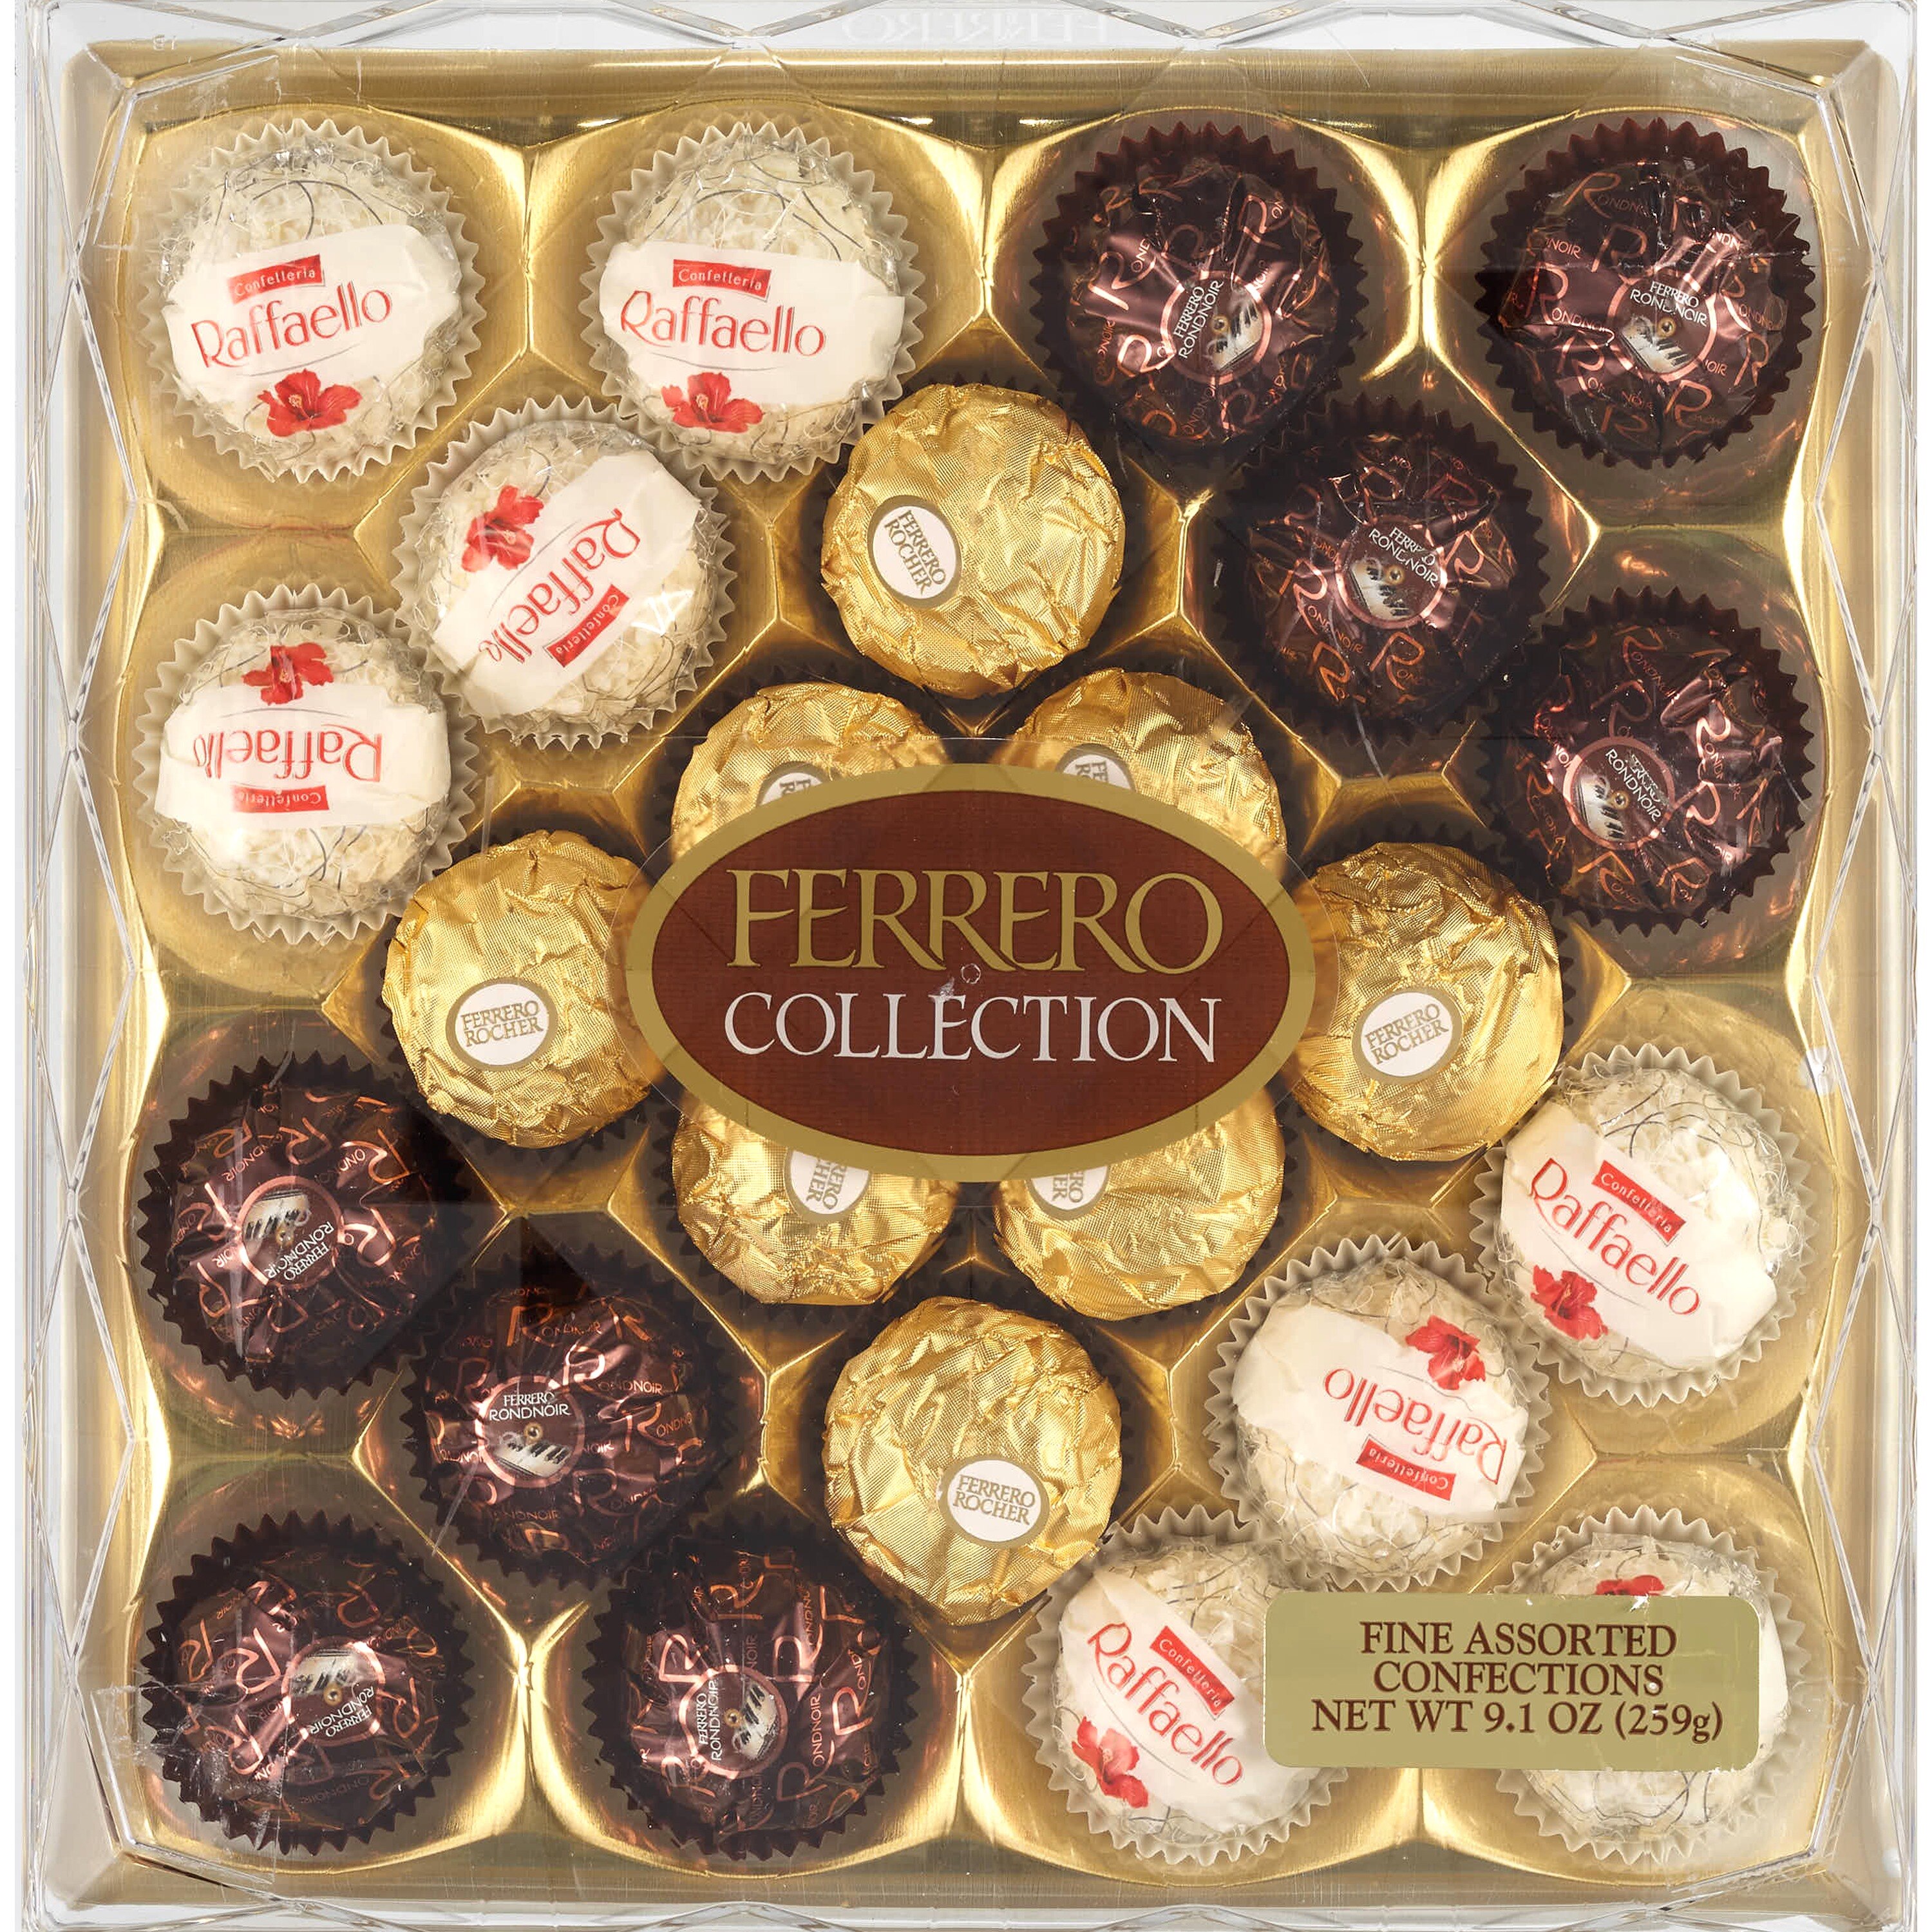 Ferrero Collection Gift Box, 24 oz 9.1 ct